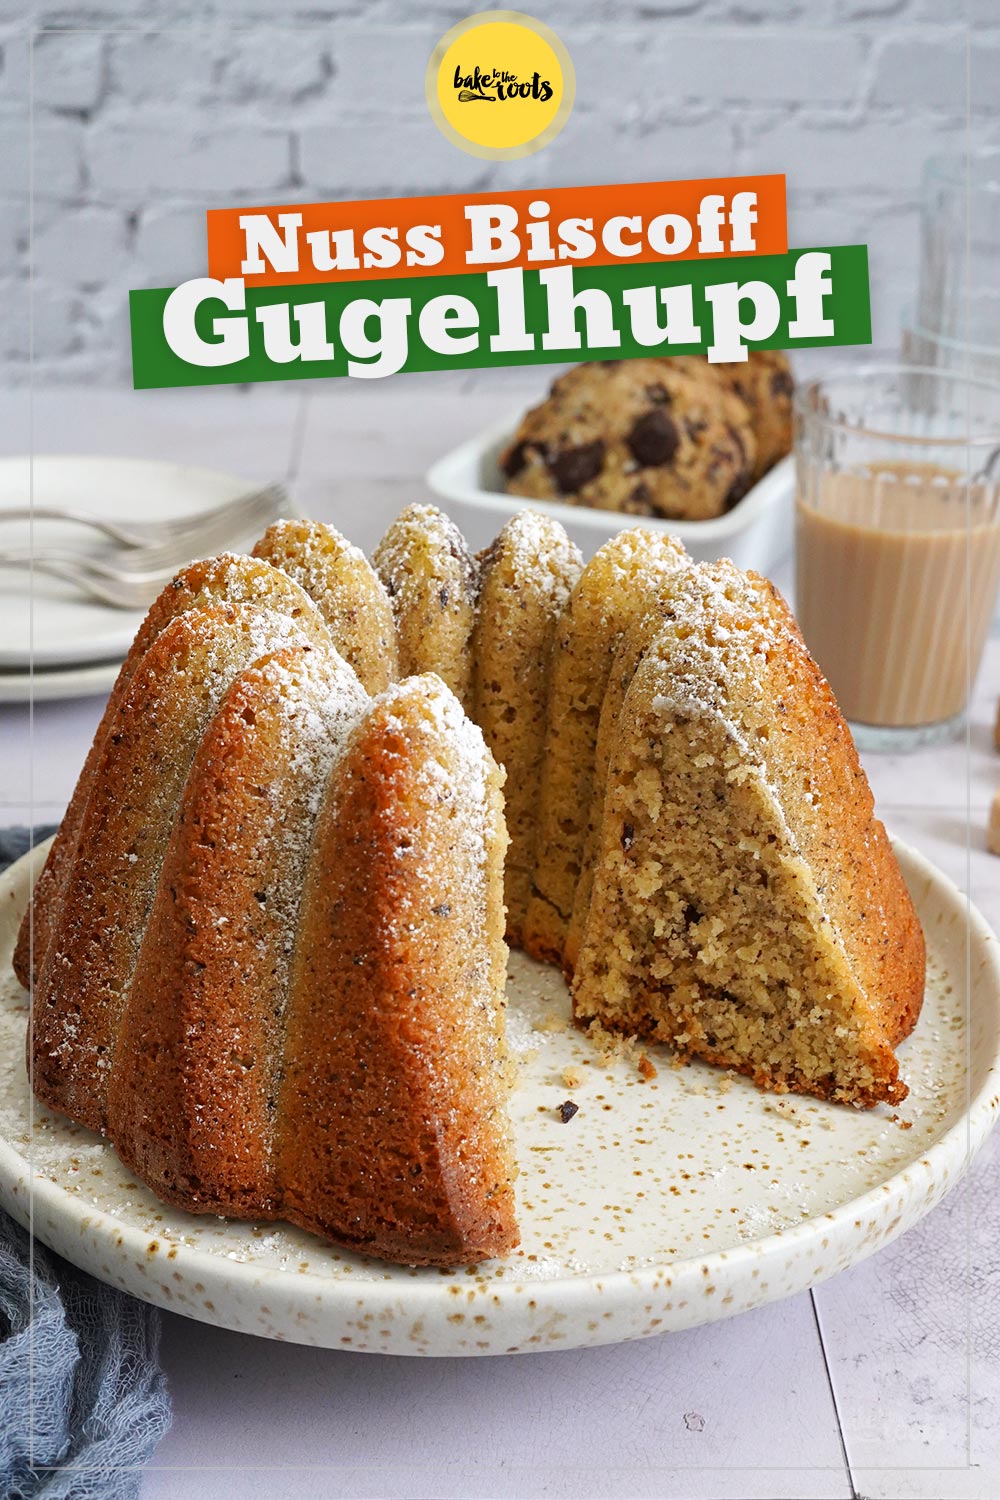 Nuss Biscoff Gugelhupf | Bake to the roots